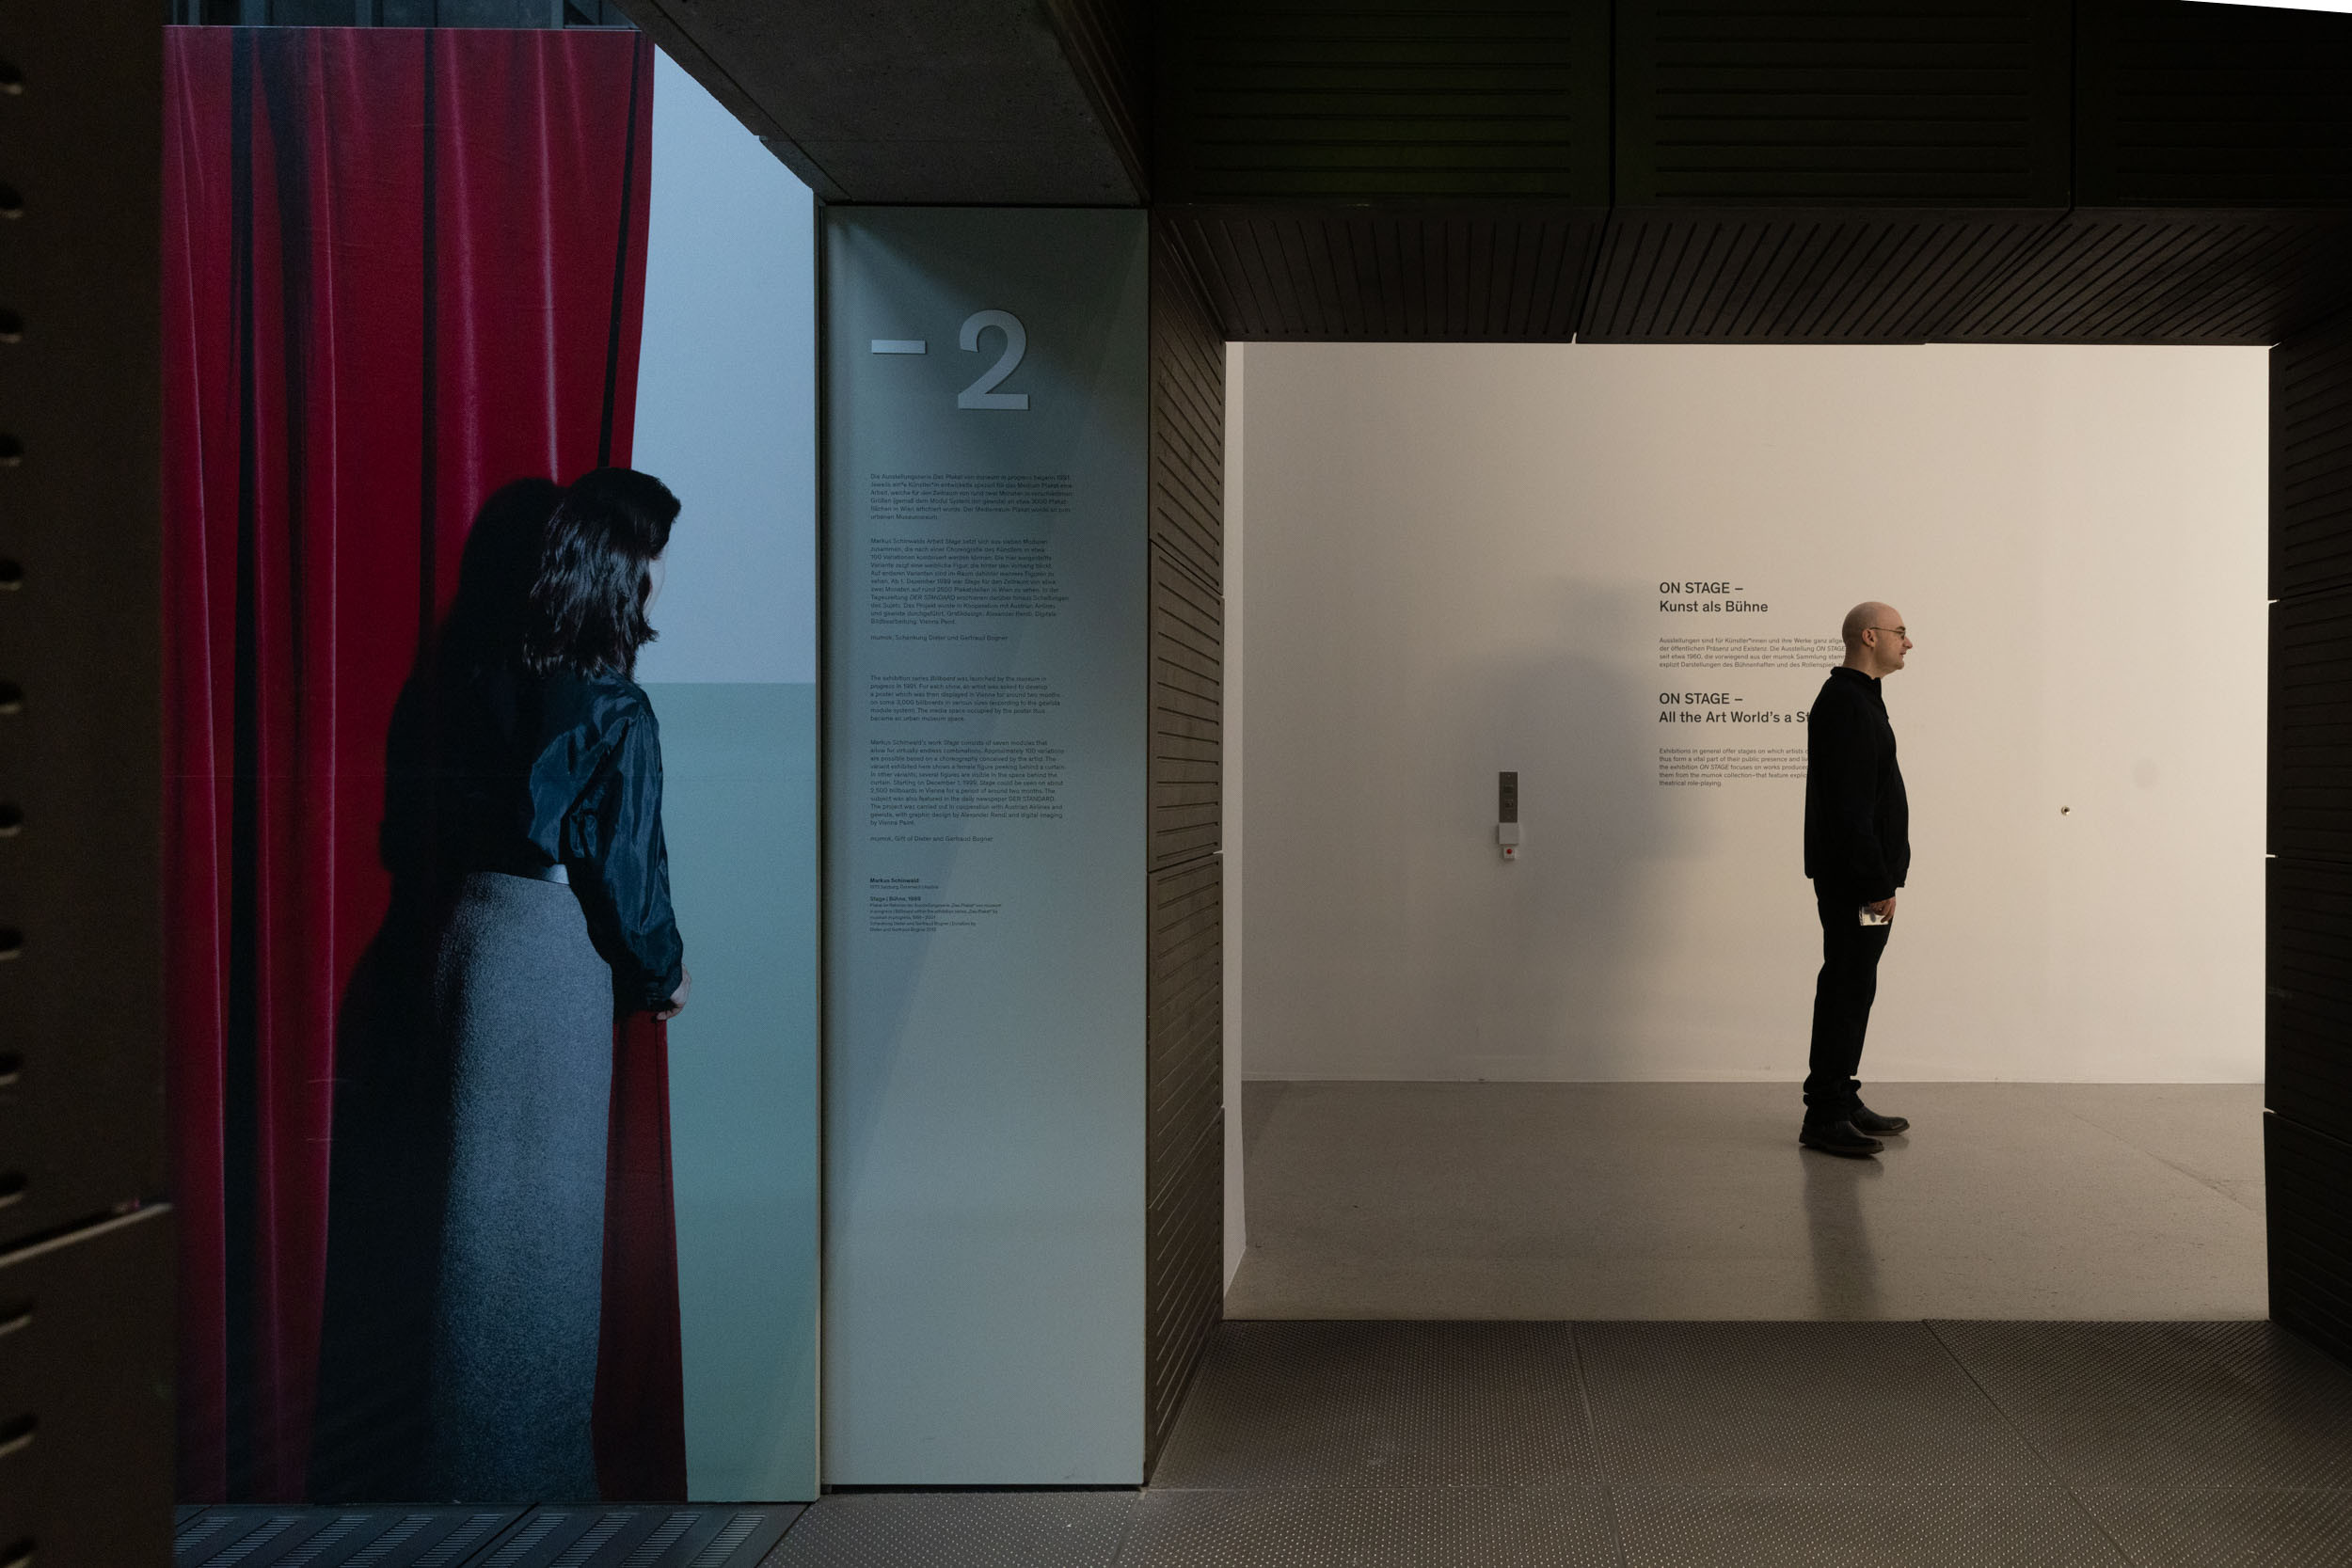 eSeL Foto: Markus Schinwald / museum in progress @ ON STAGE – Kunst als Bühne (mumok, 14.3.2023 - 14.1.2024)